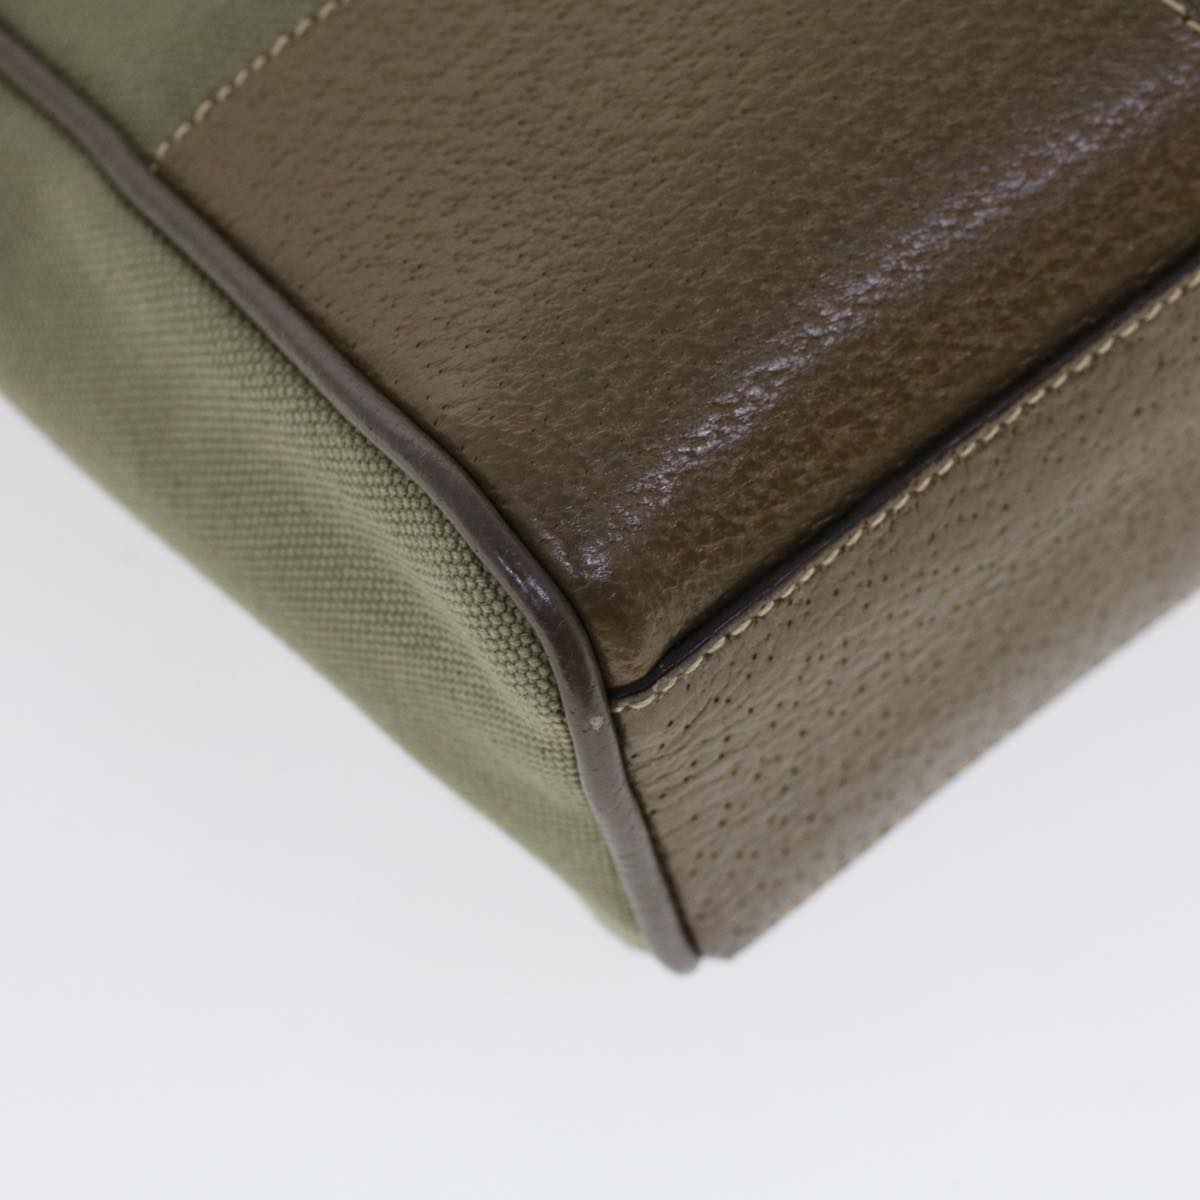 PRADA Hand Bag Canvas Leather Green Auth 53252